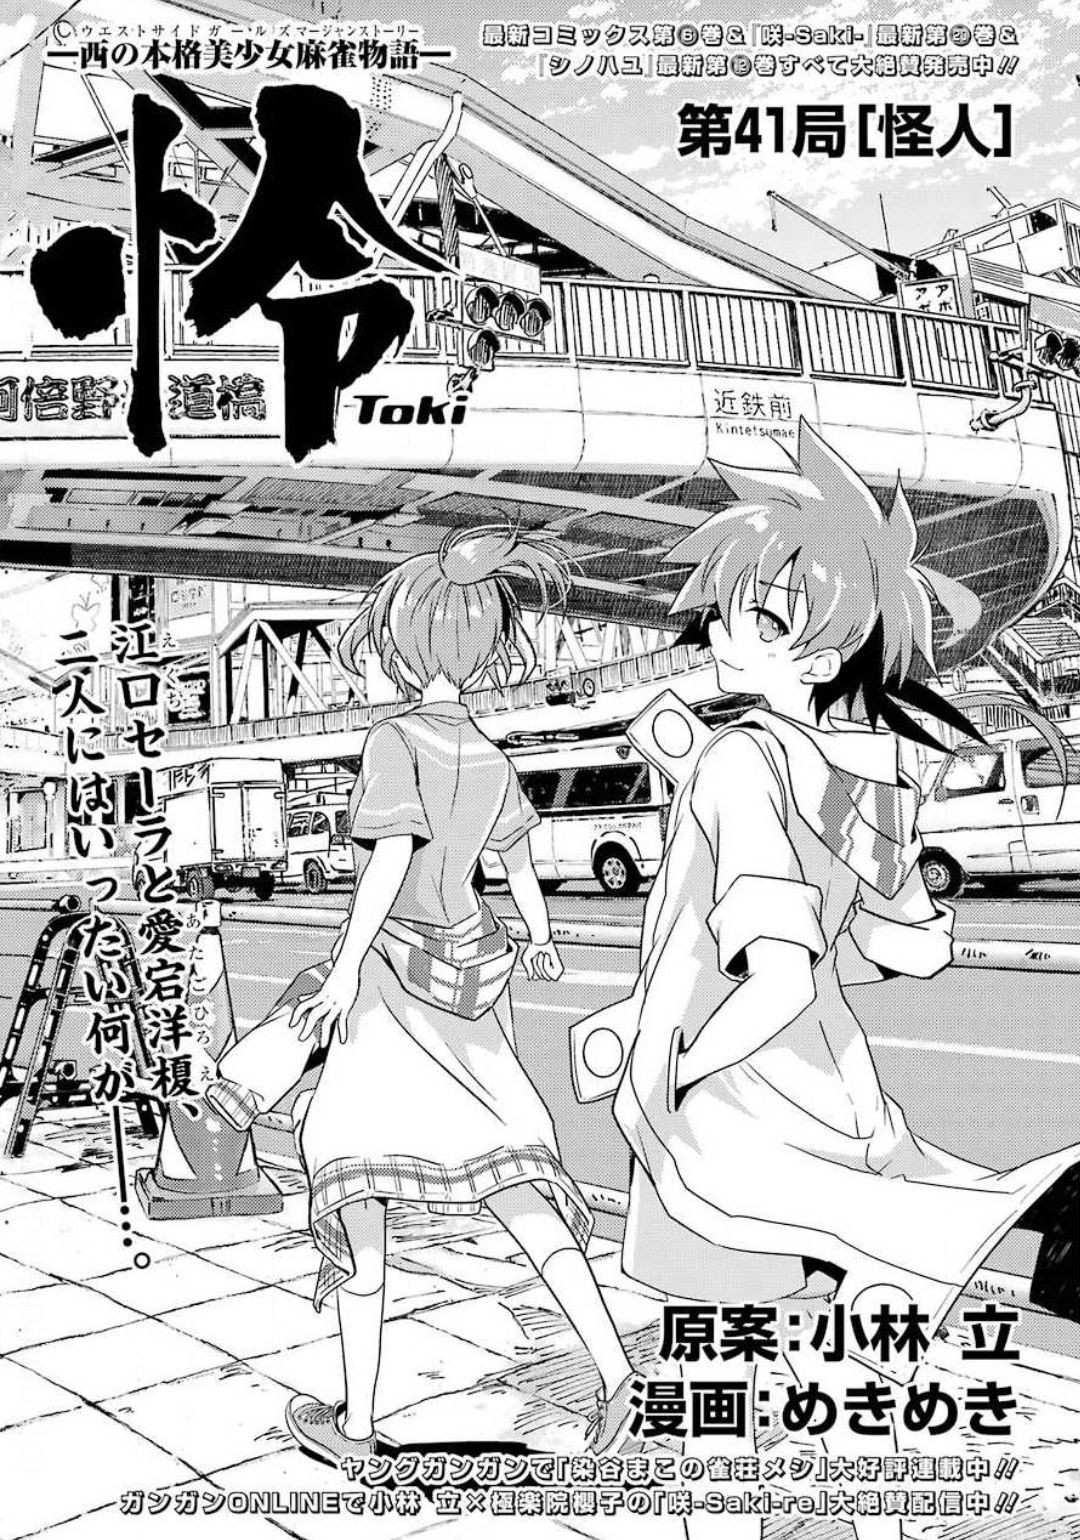 Toki Kobayashi Ritz Chapter 041 Page 1 Raw Manga 生漫画